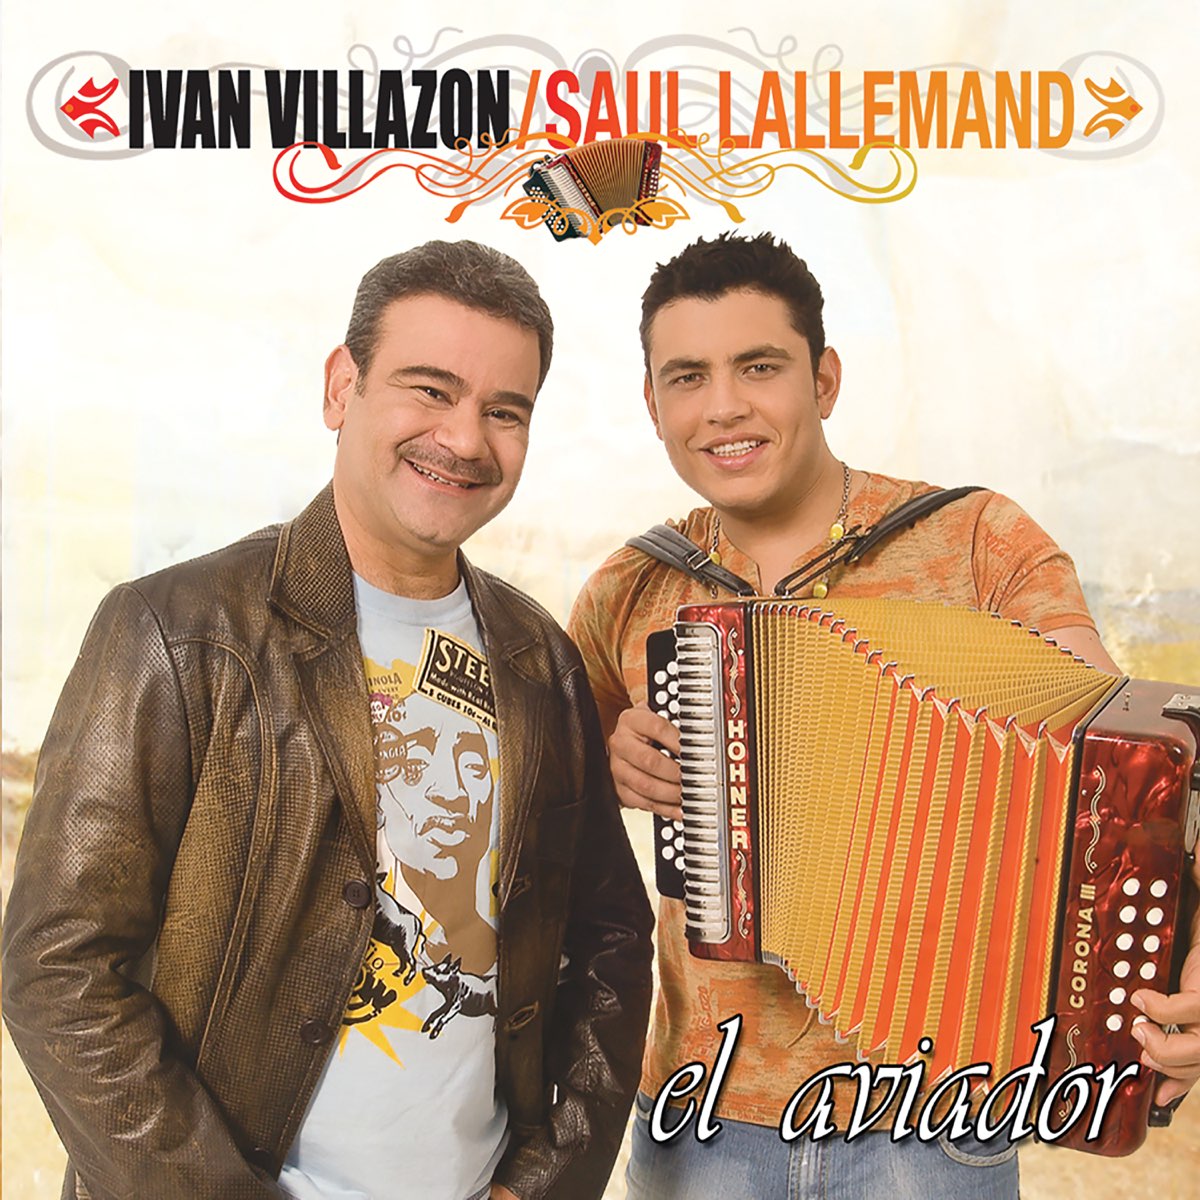 El Aviador by Iván Villazón & Saul Lallemand on Apple Music